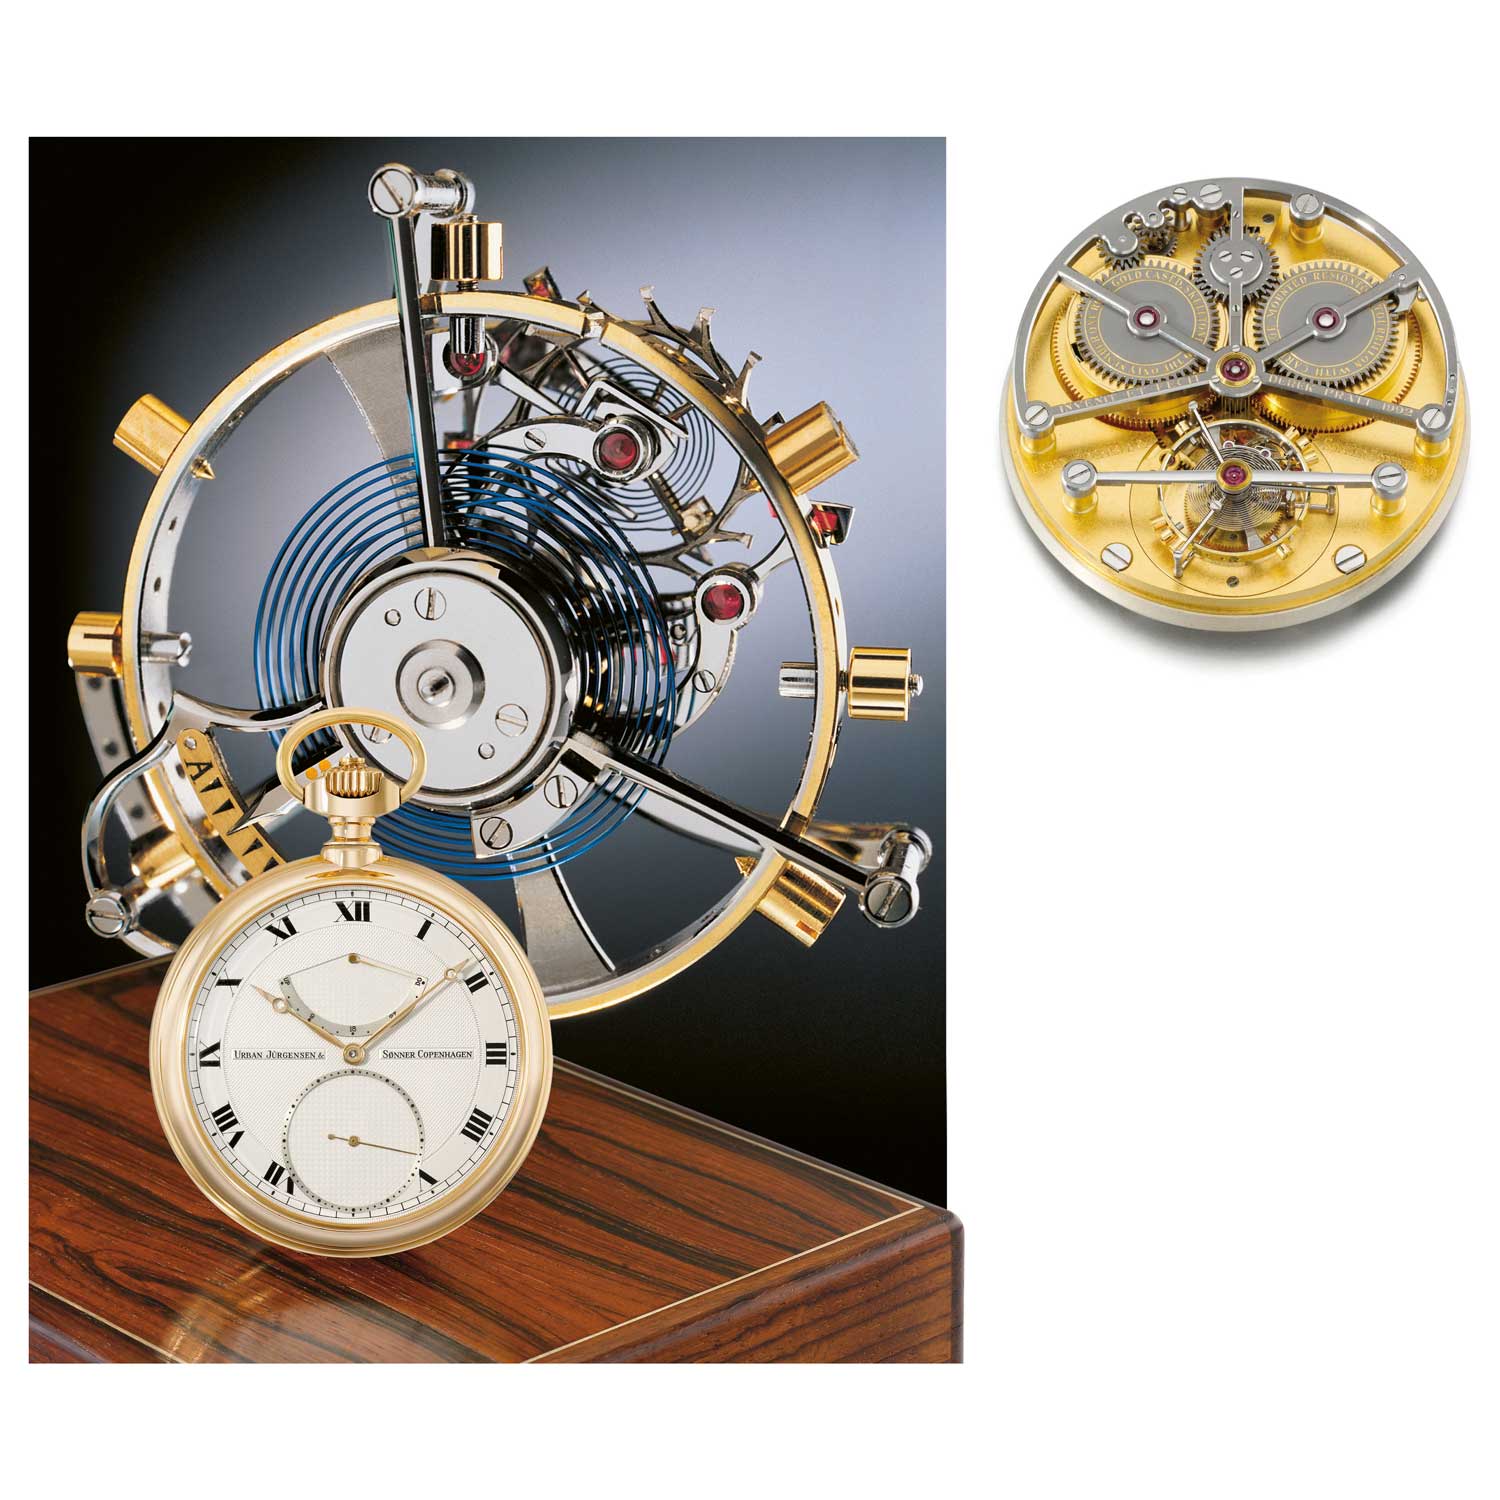 An Urban Jürgensen & Sønner tourbillon pocket watch with Pratt’s signature carriage-mounted remontoir (Image: Christie's)